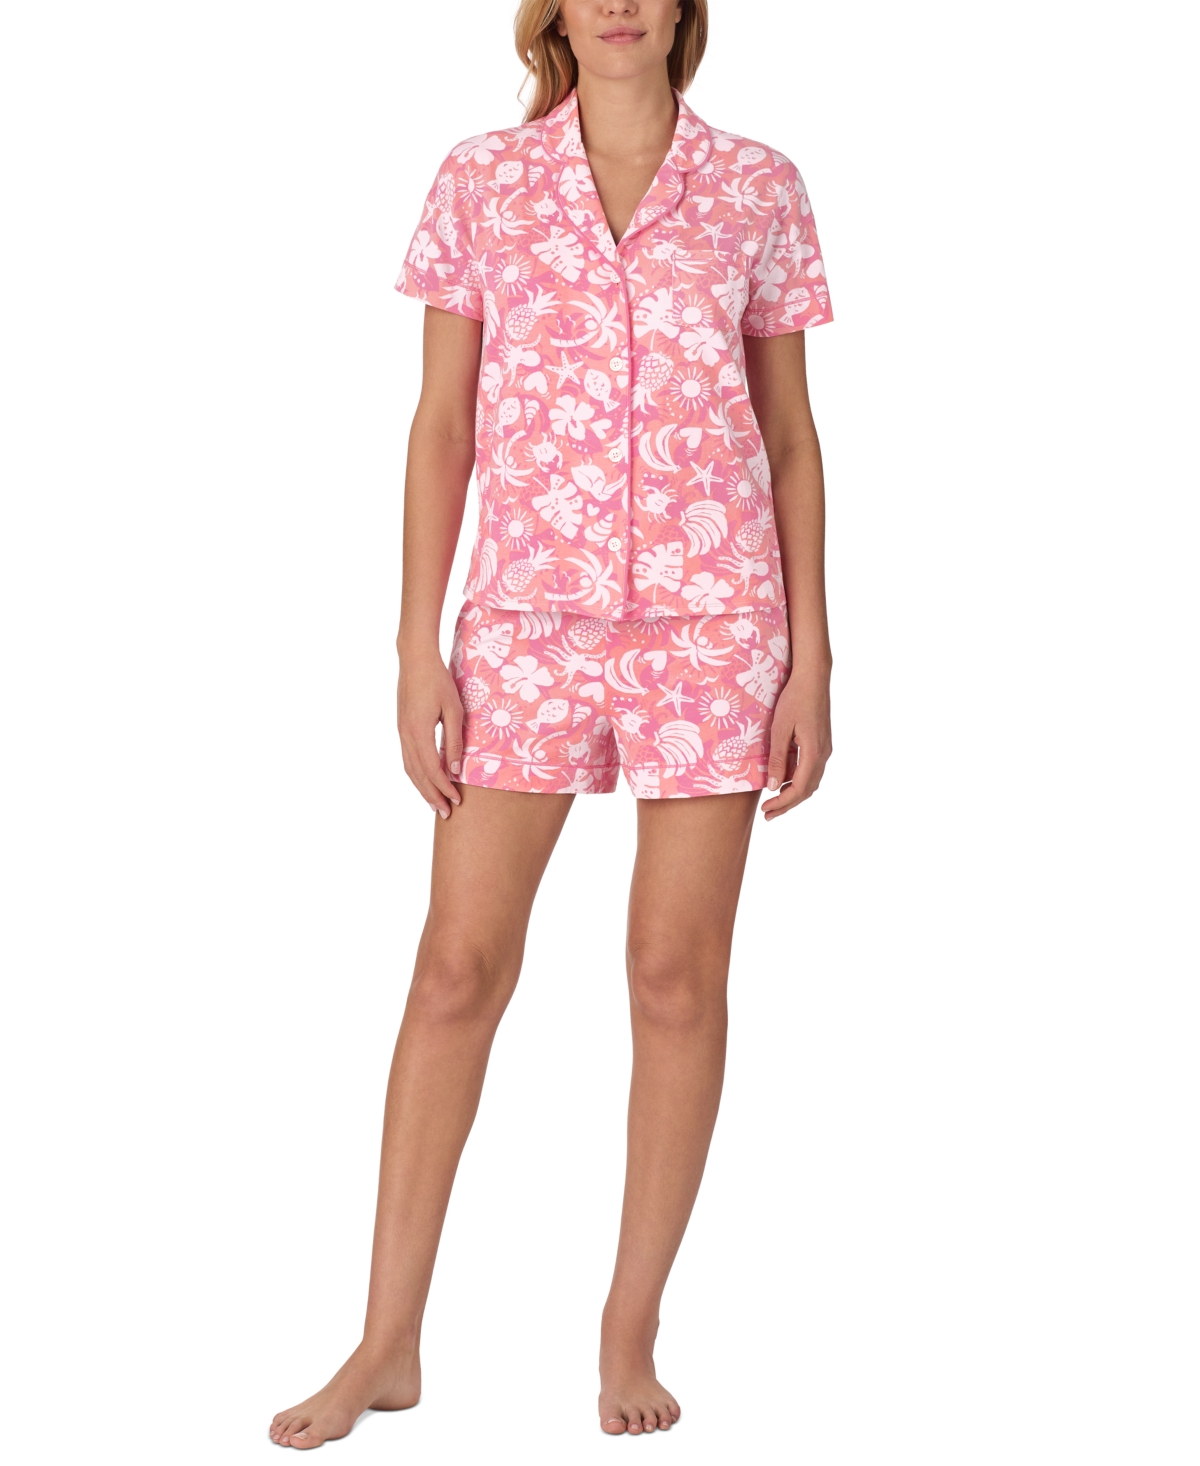 Women's 2-Pc. Notched-Collar Shortie Pajamas Set - Coral Print